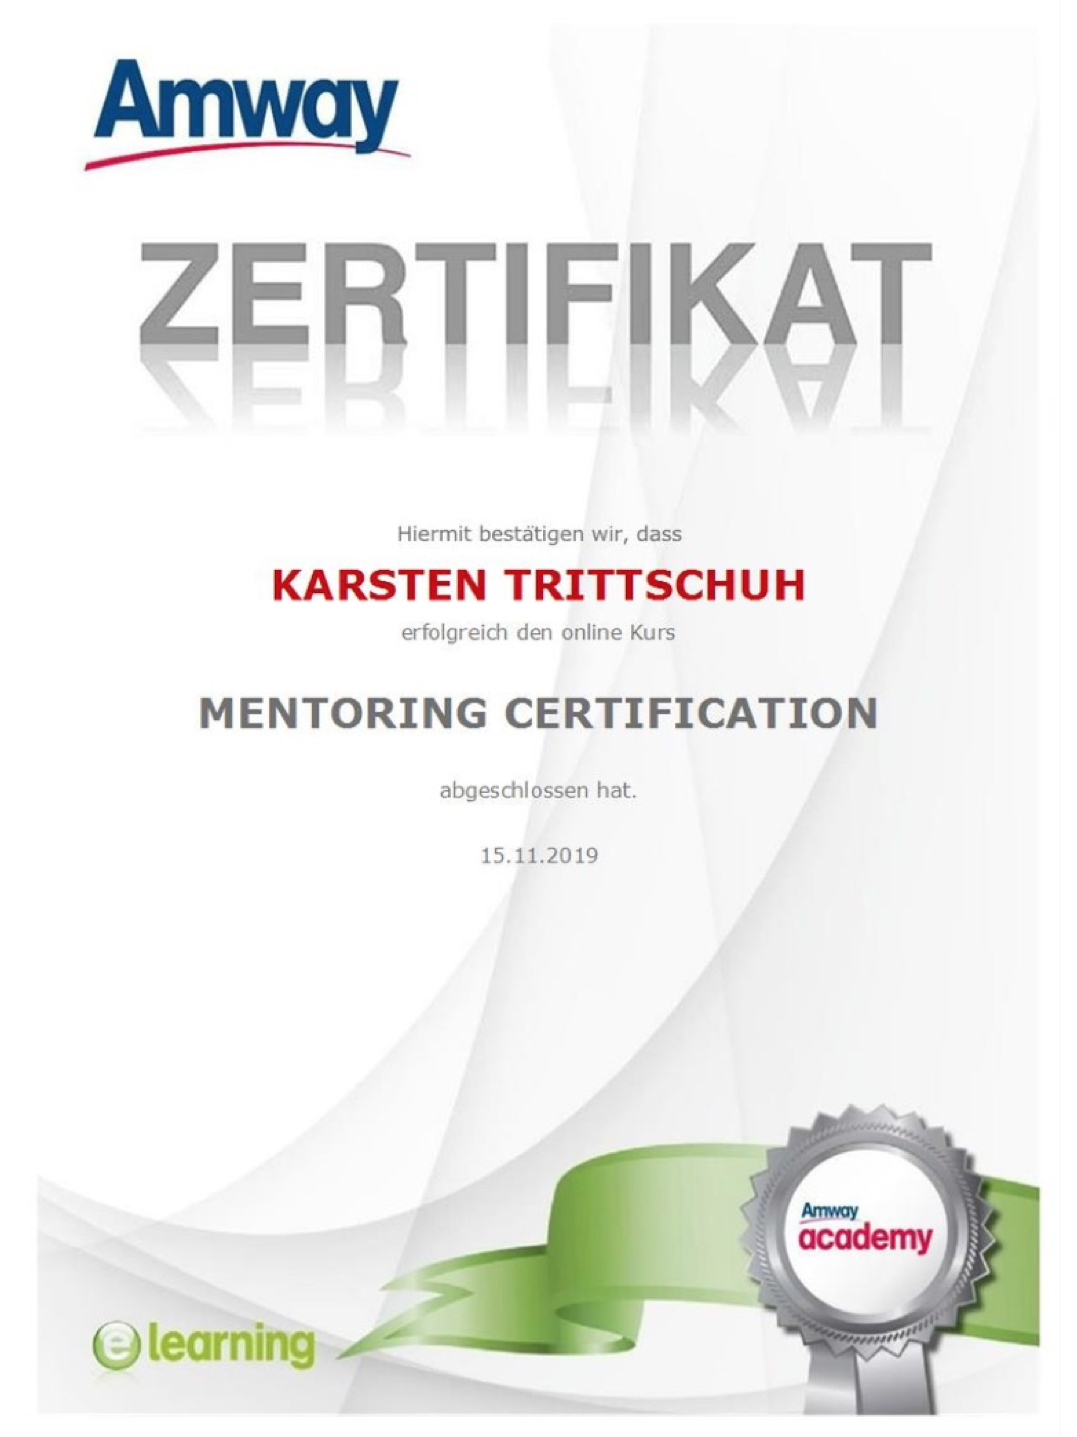 Zertifikat - Mentoring - Karsten Trittschuh